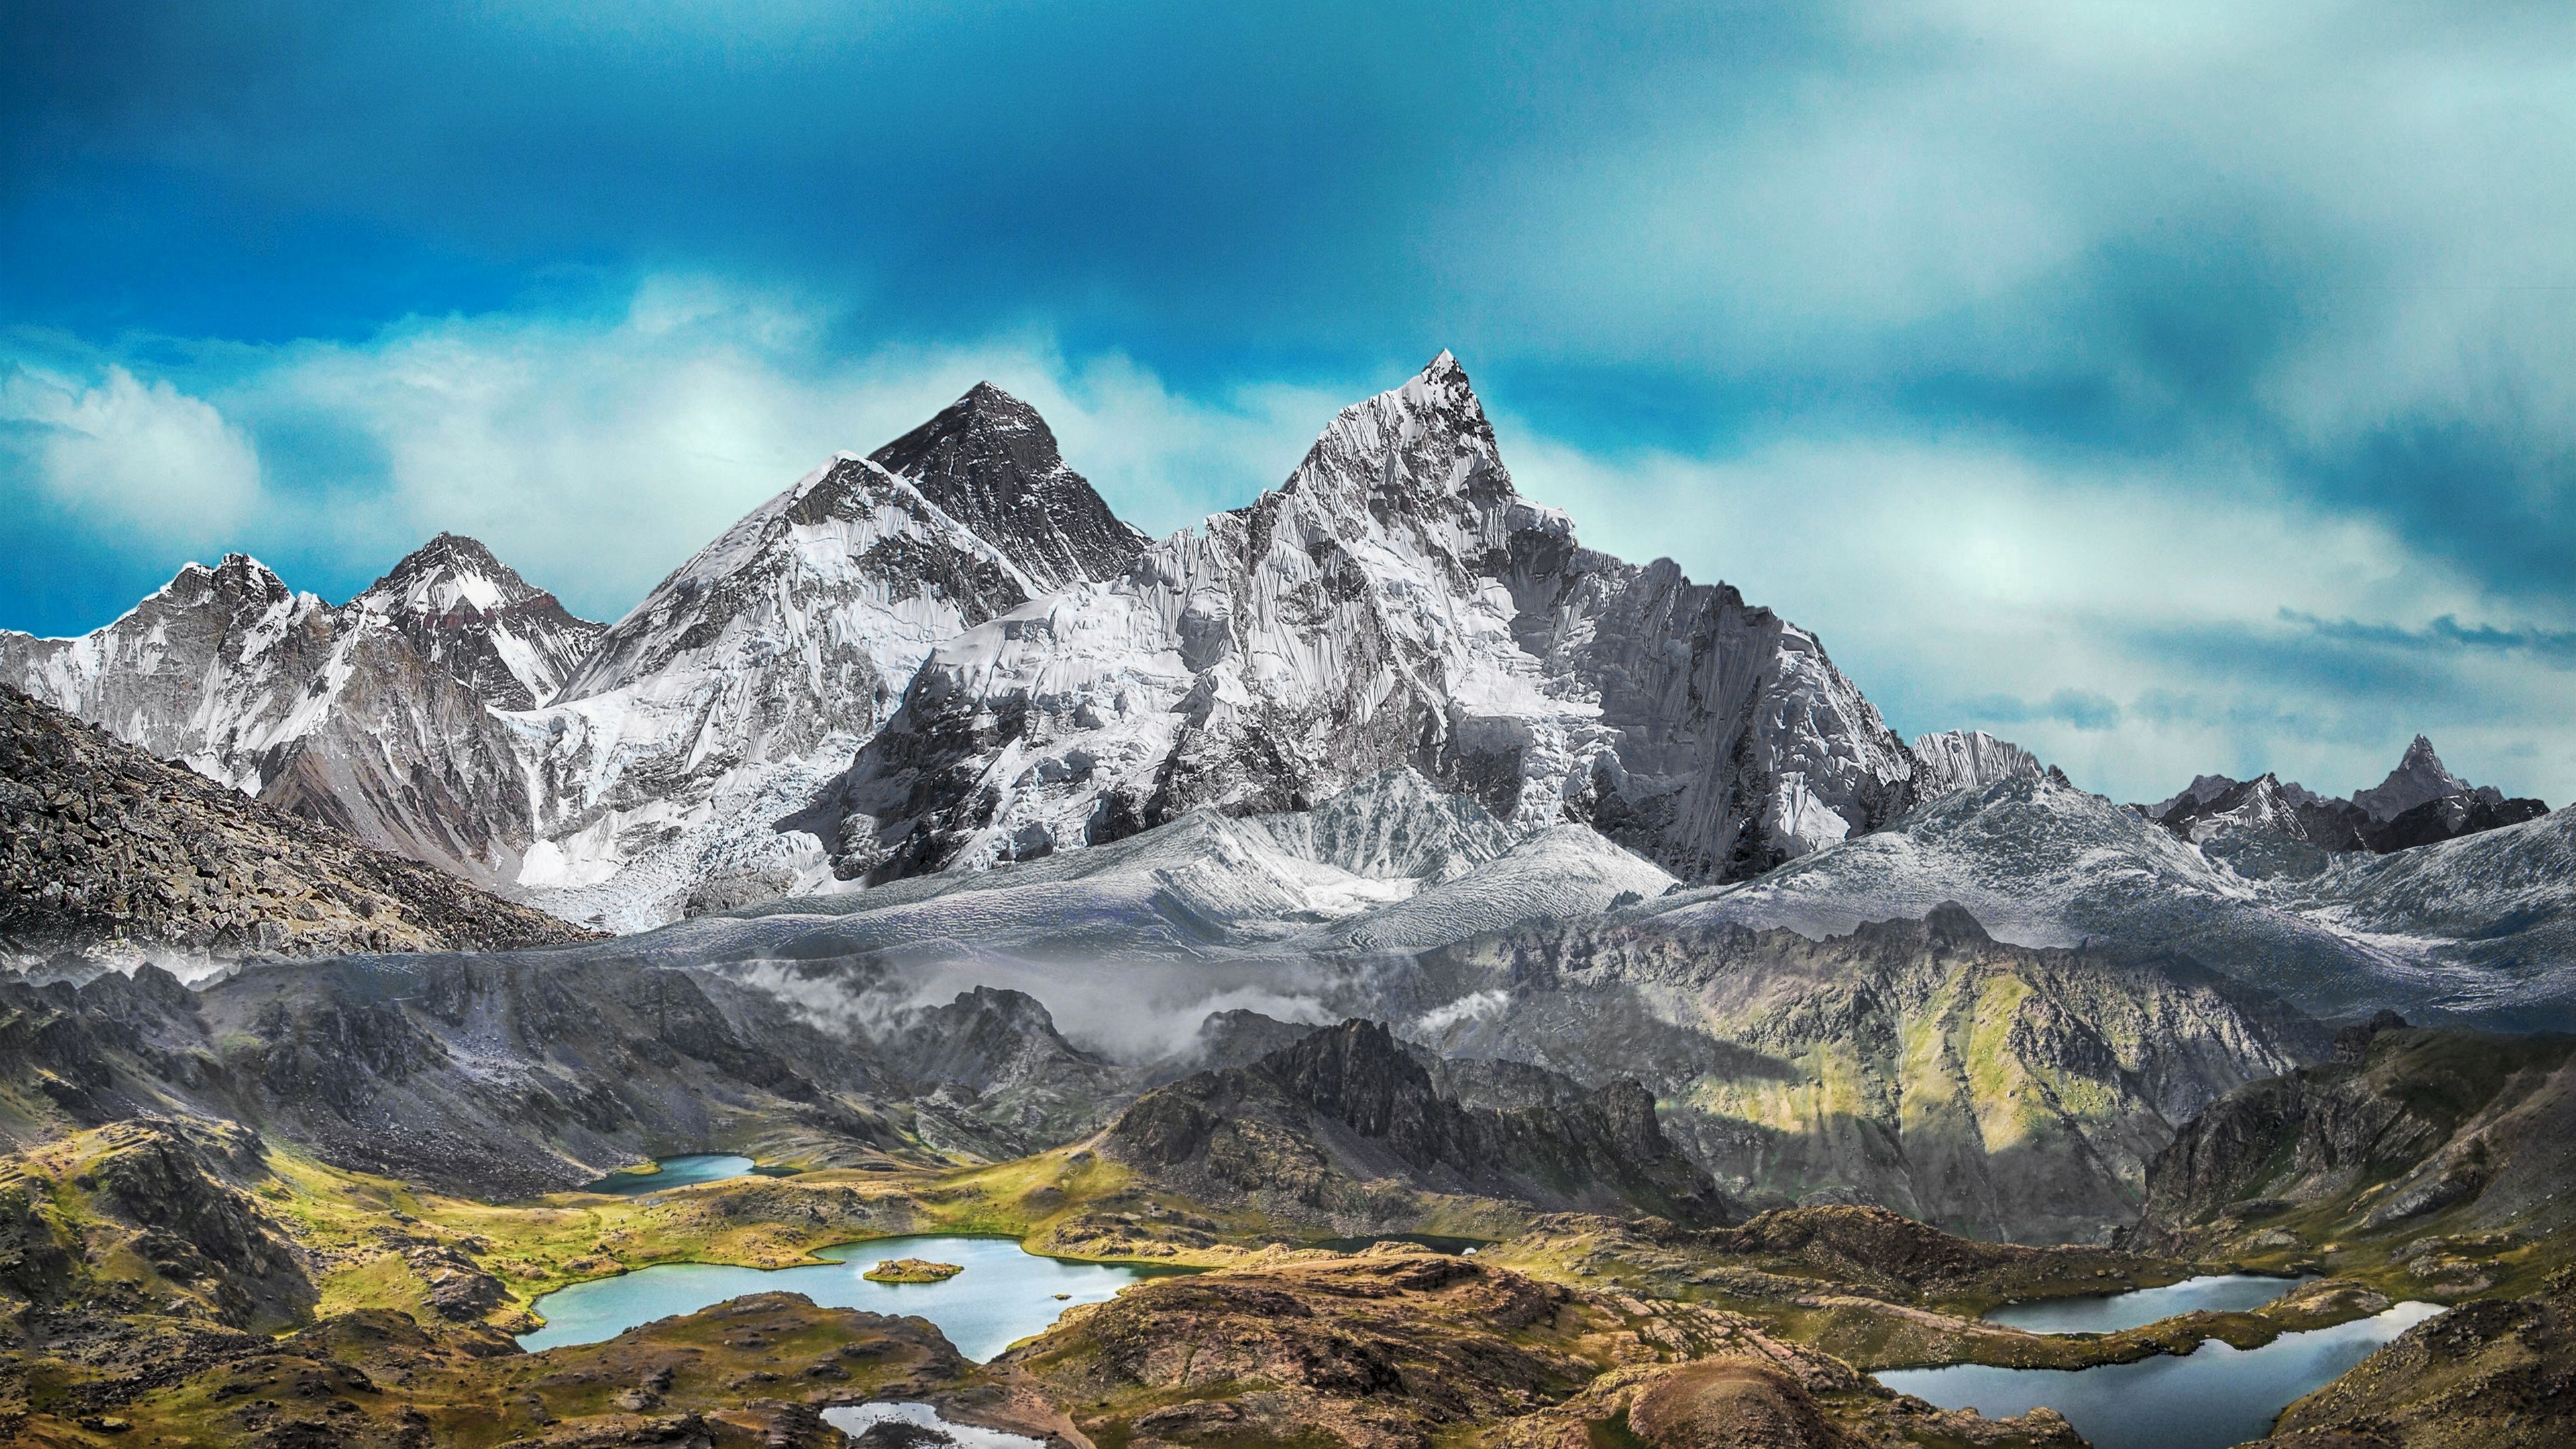 Download Mountain range, summit, landscape, nature wallpaper, 3840x 4K UHD 16: Widescreen